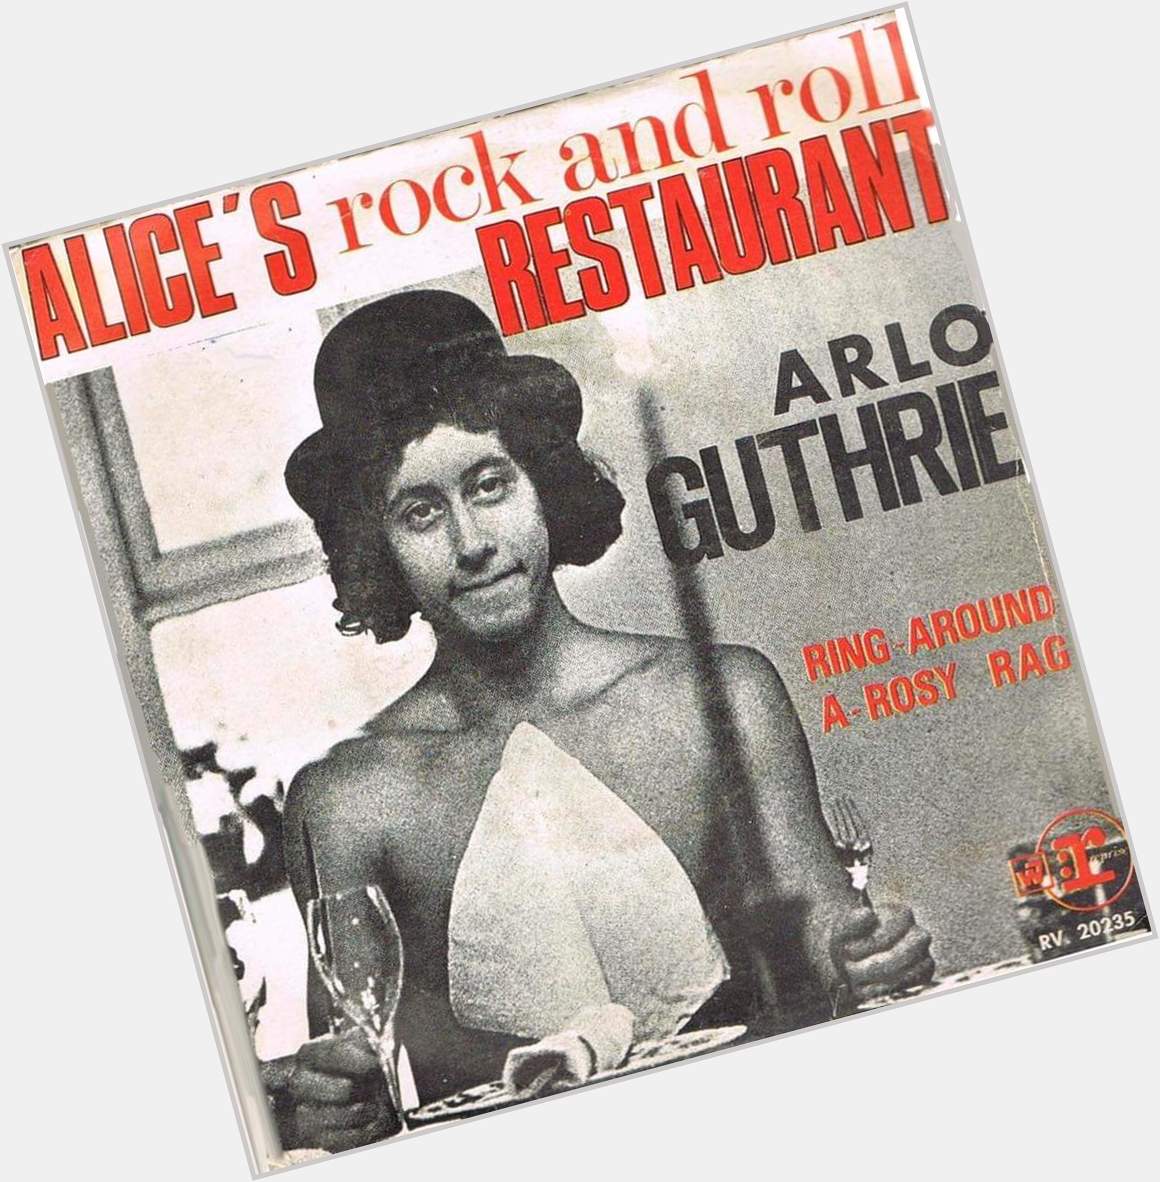 Happy birthday Arlo Guthrie, born today in 1947. 